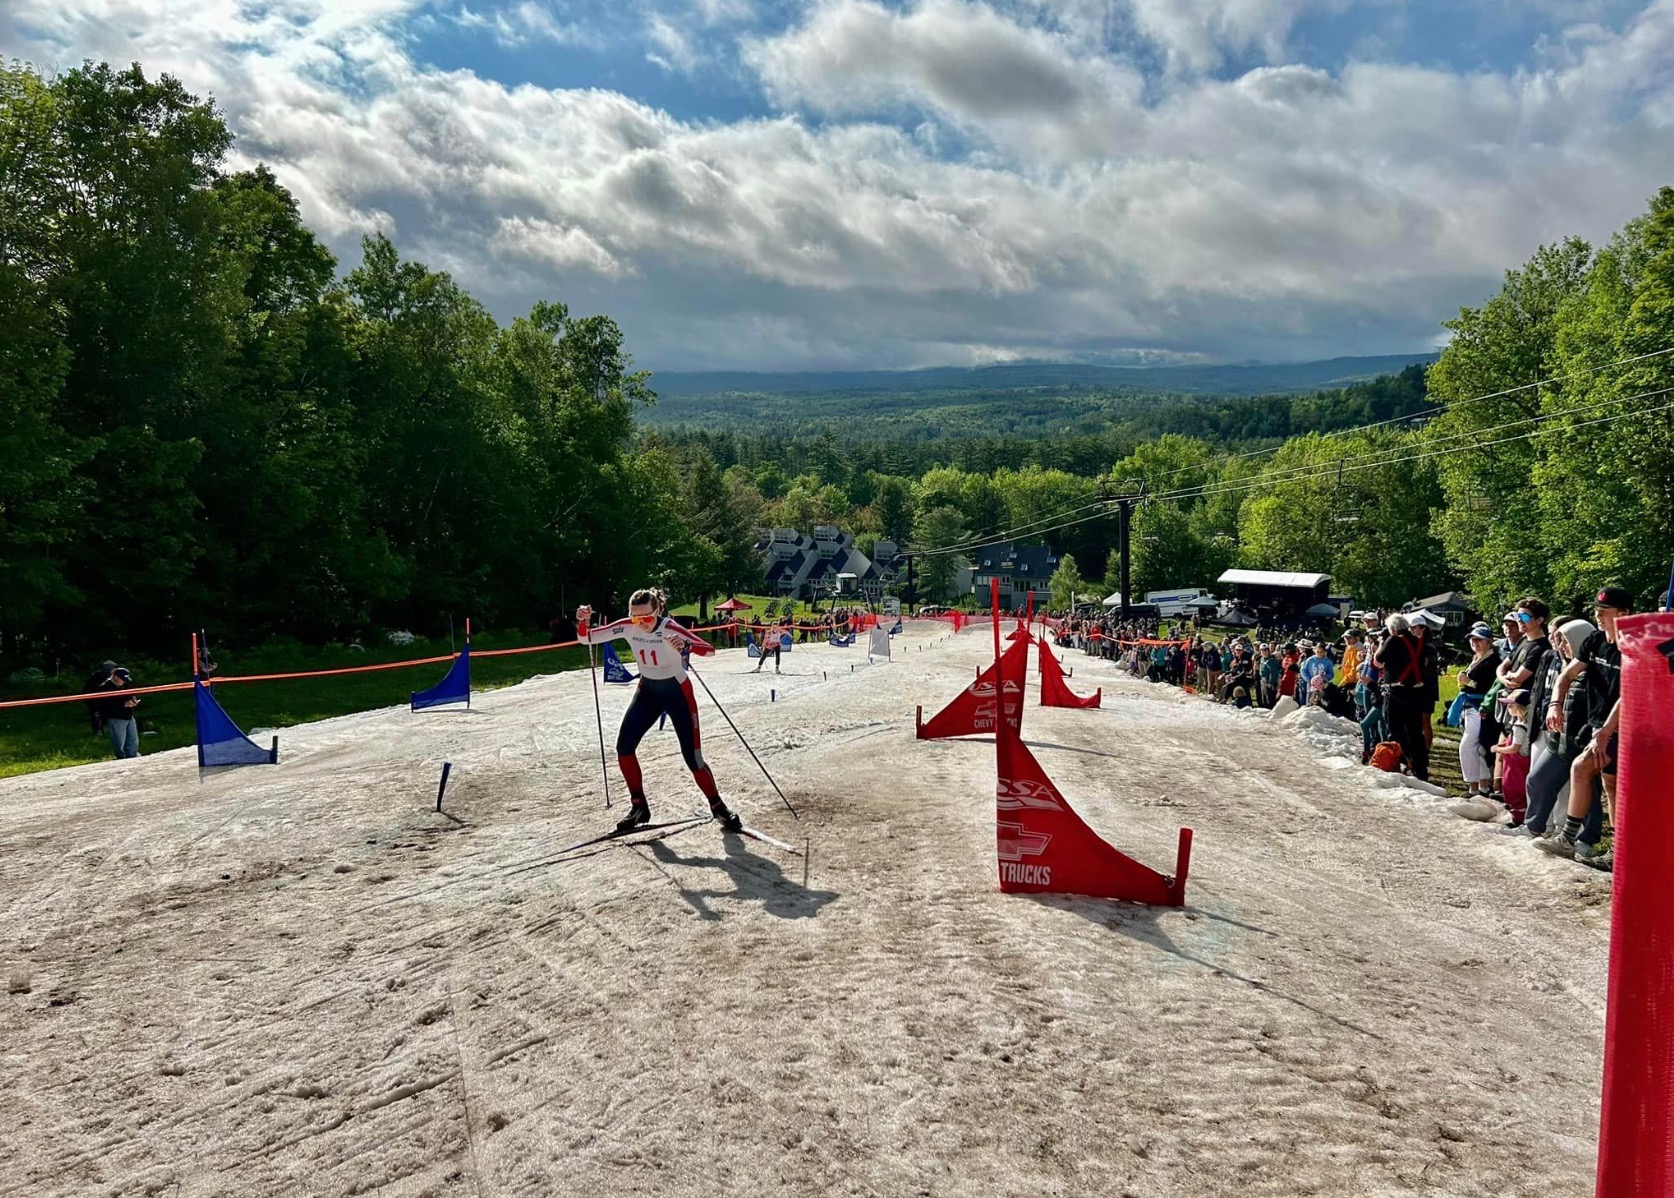 Vermont Ski Area Hosts June Nordic Skiing Race